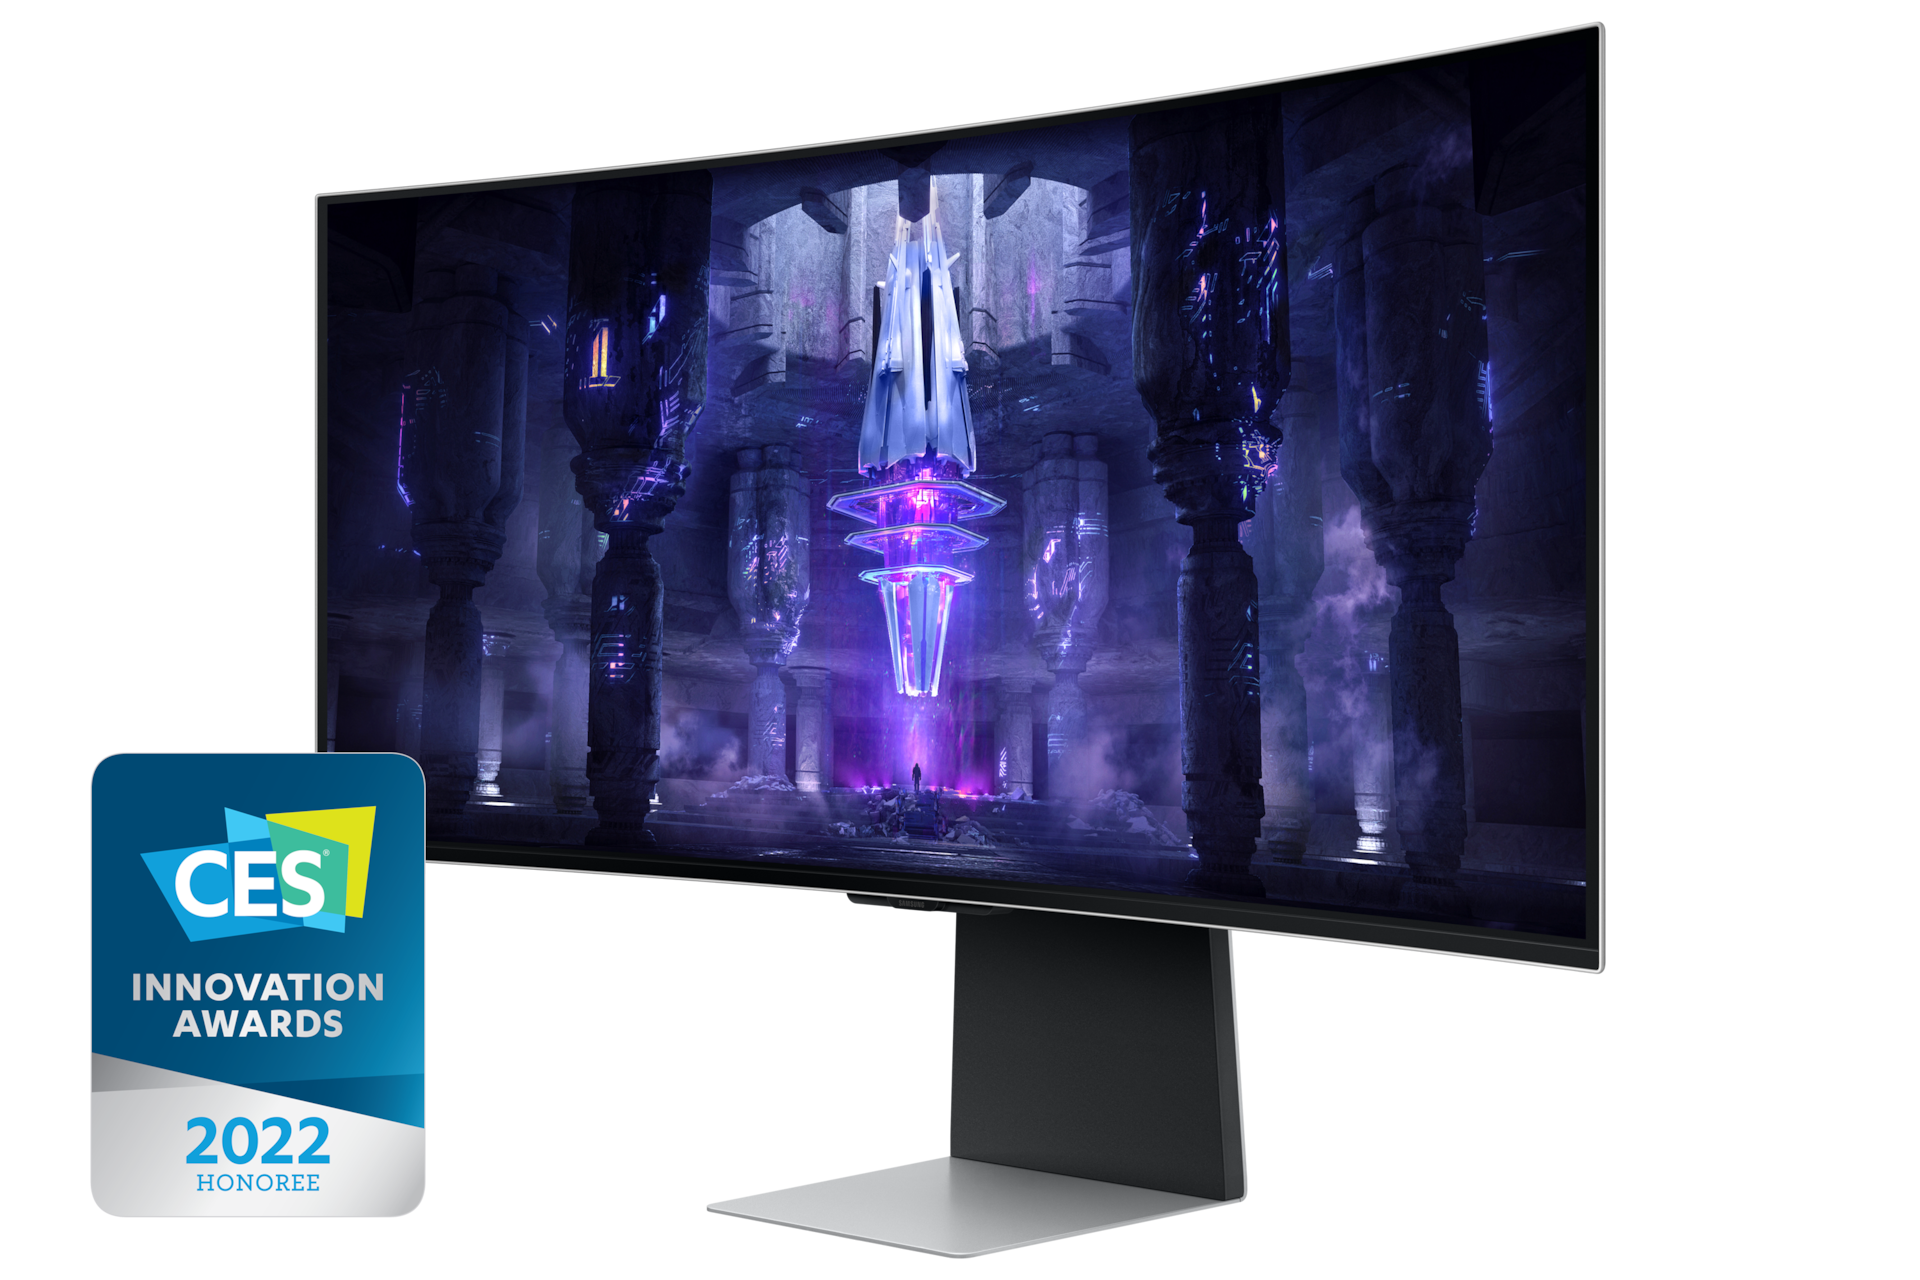 Upcoming 32-inch 4K OLED gaming monitors from Samsung and LG look